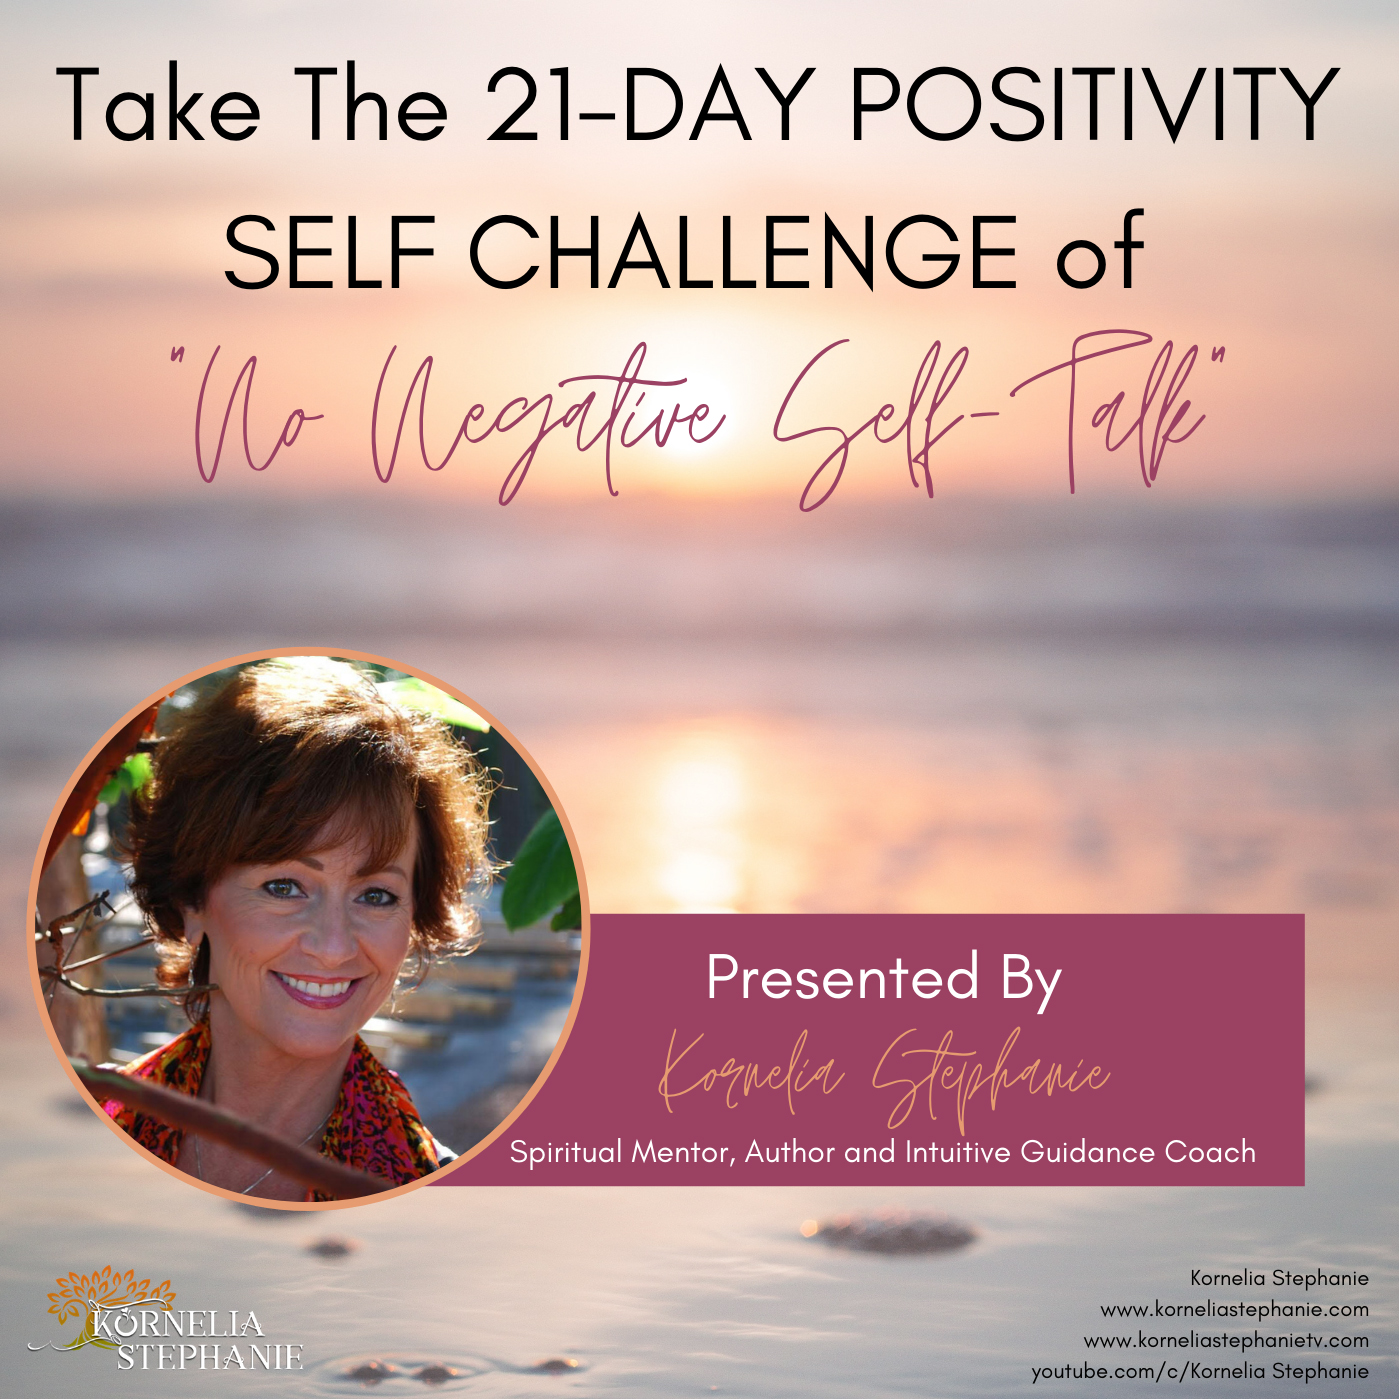 21 day positivity self challenge - no negative self talk with Kornelia Stephanie - Self Paced